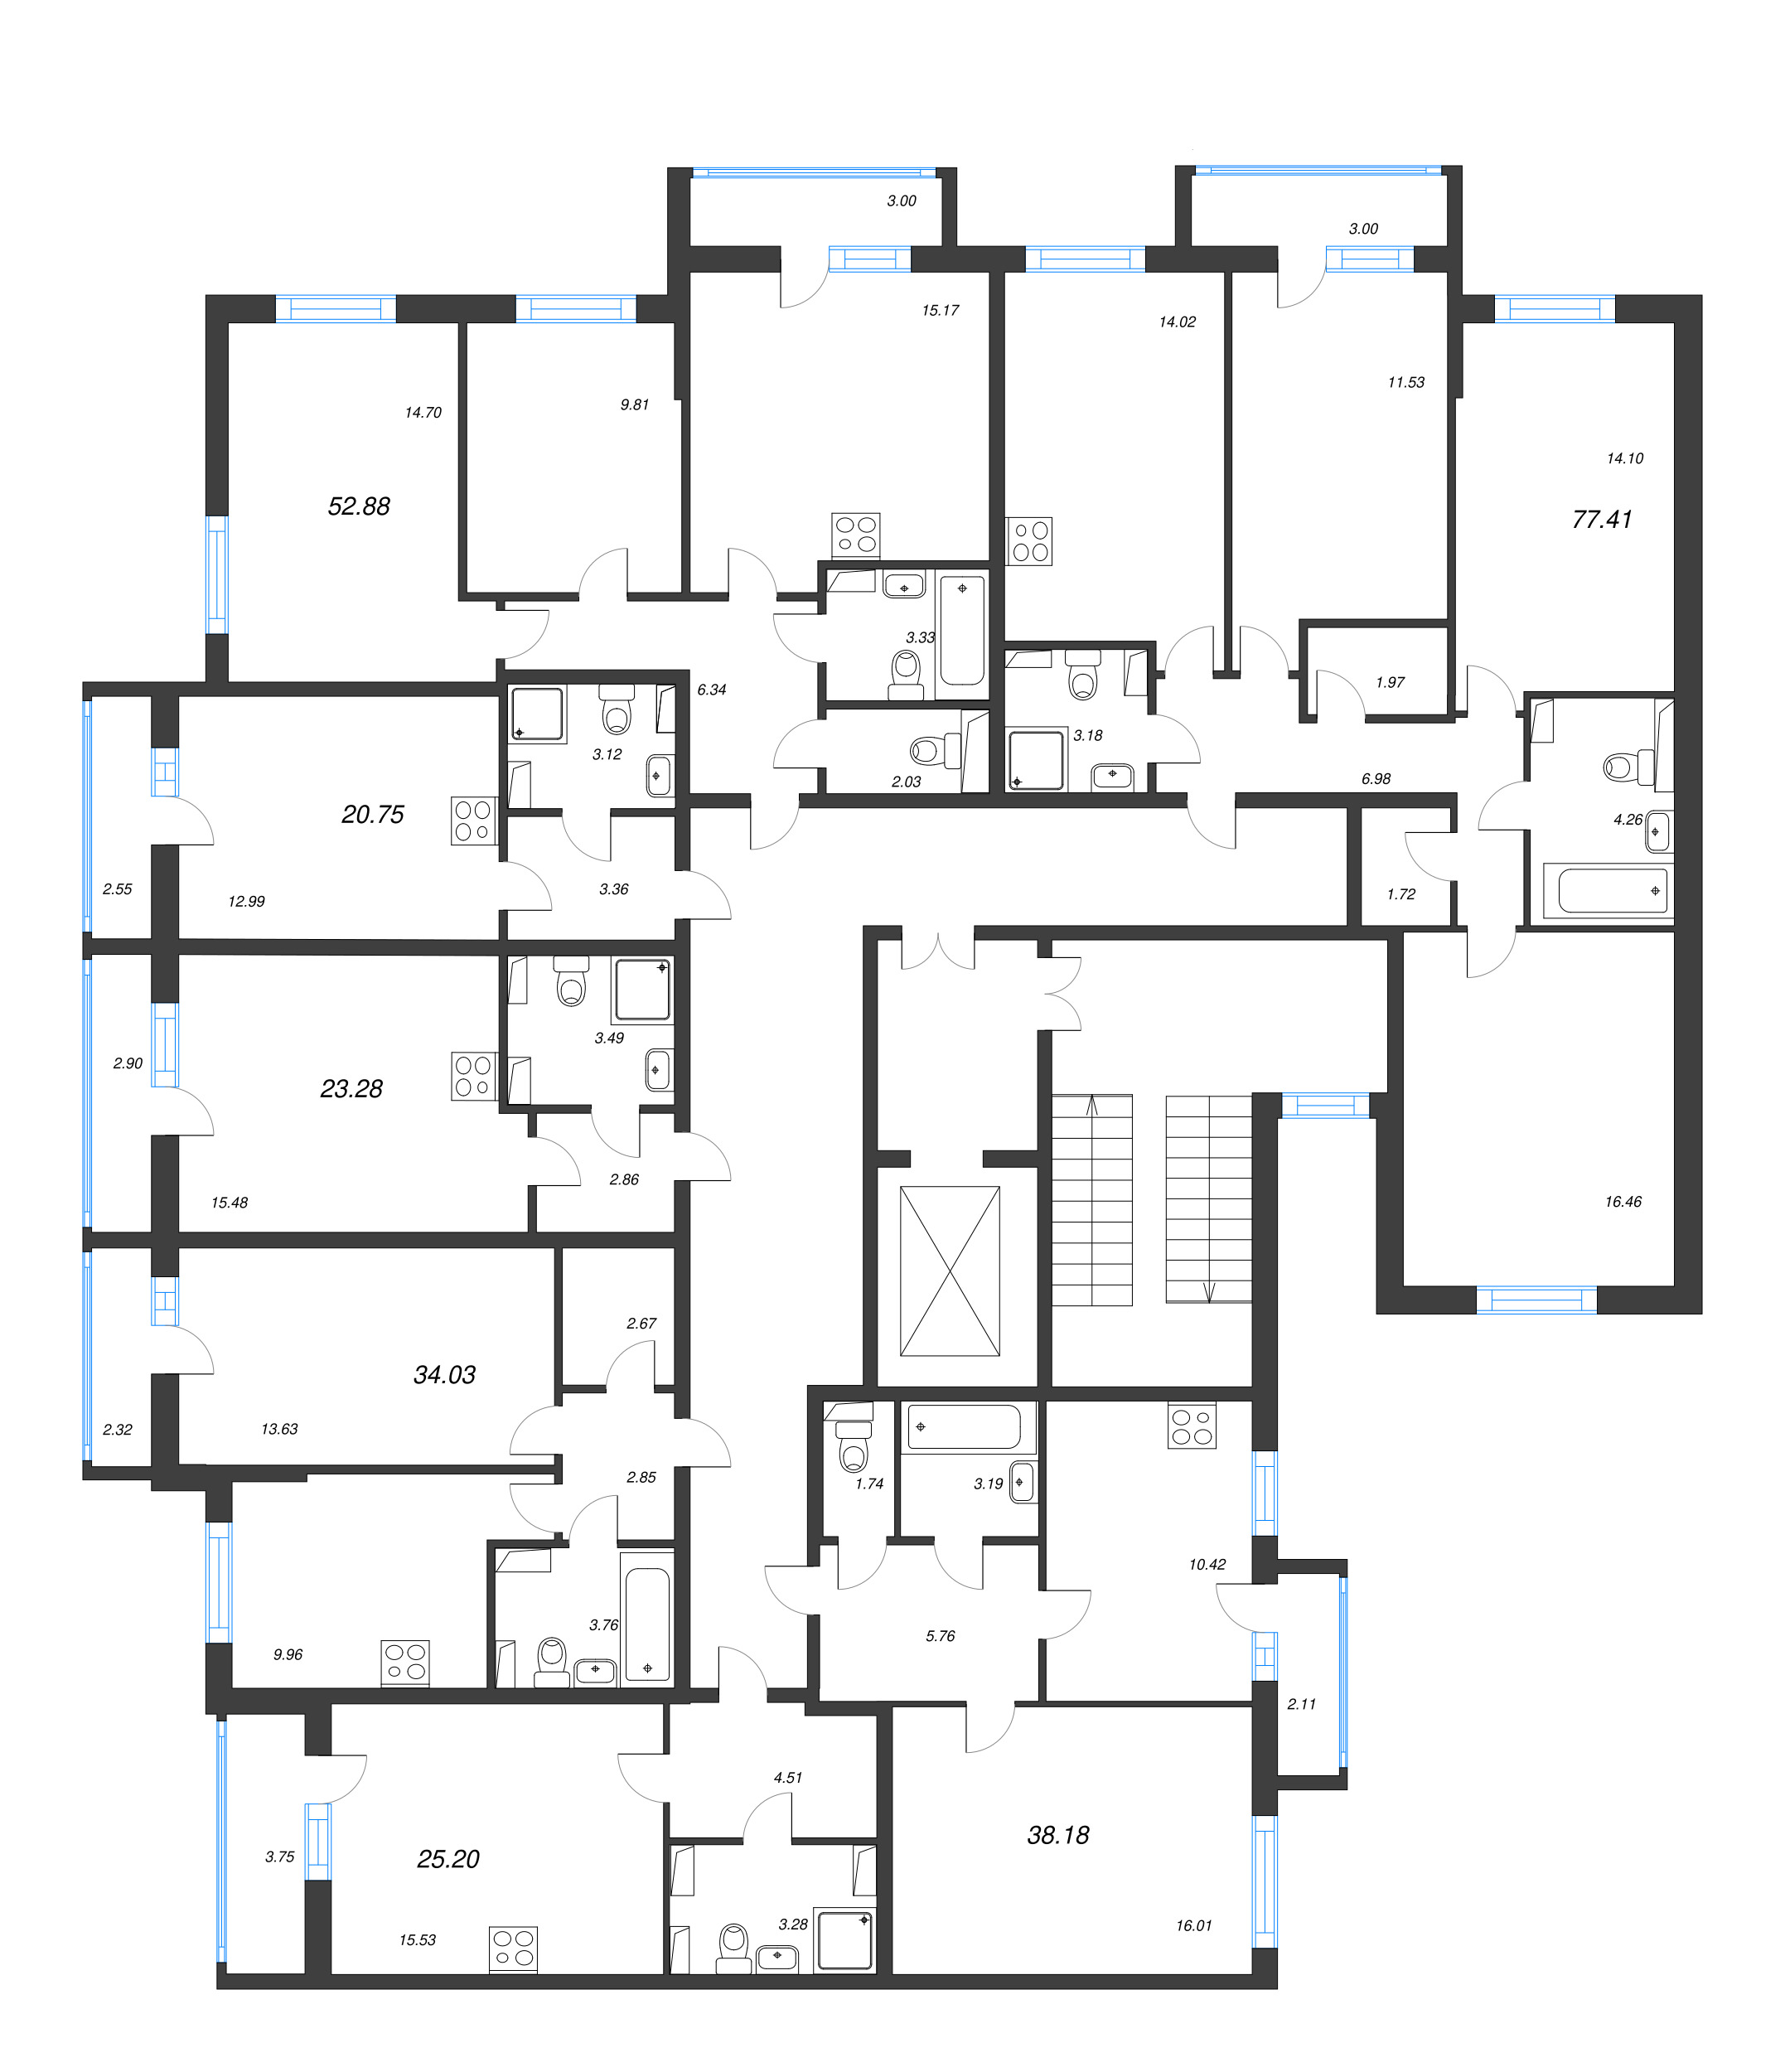 3-комнатная (Евро) квартира, 52.88 м² - планировка этажа